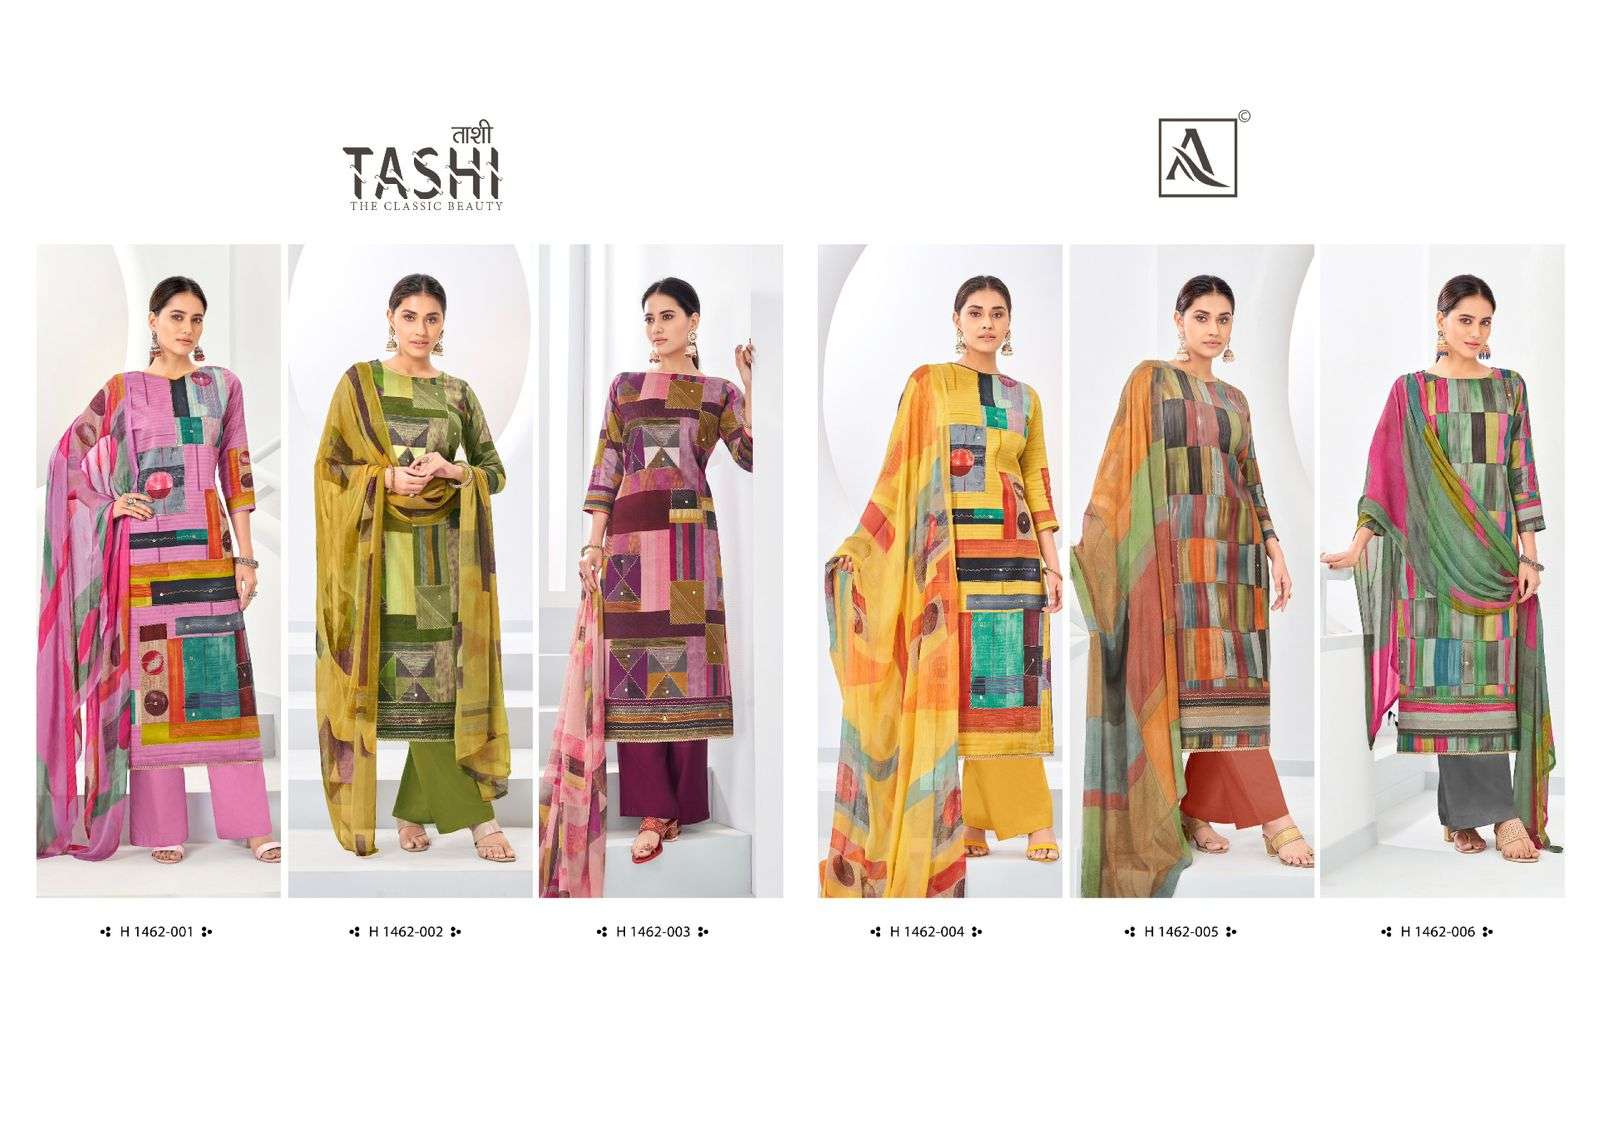 Alok Tashi Premium Cotton Designer Salwar Suits Wholesale catalog